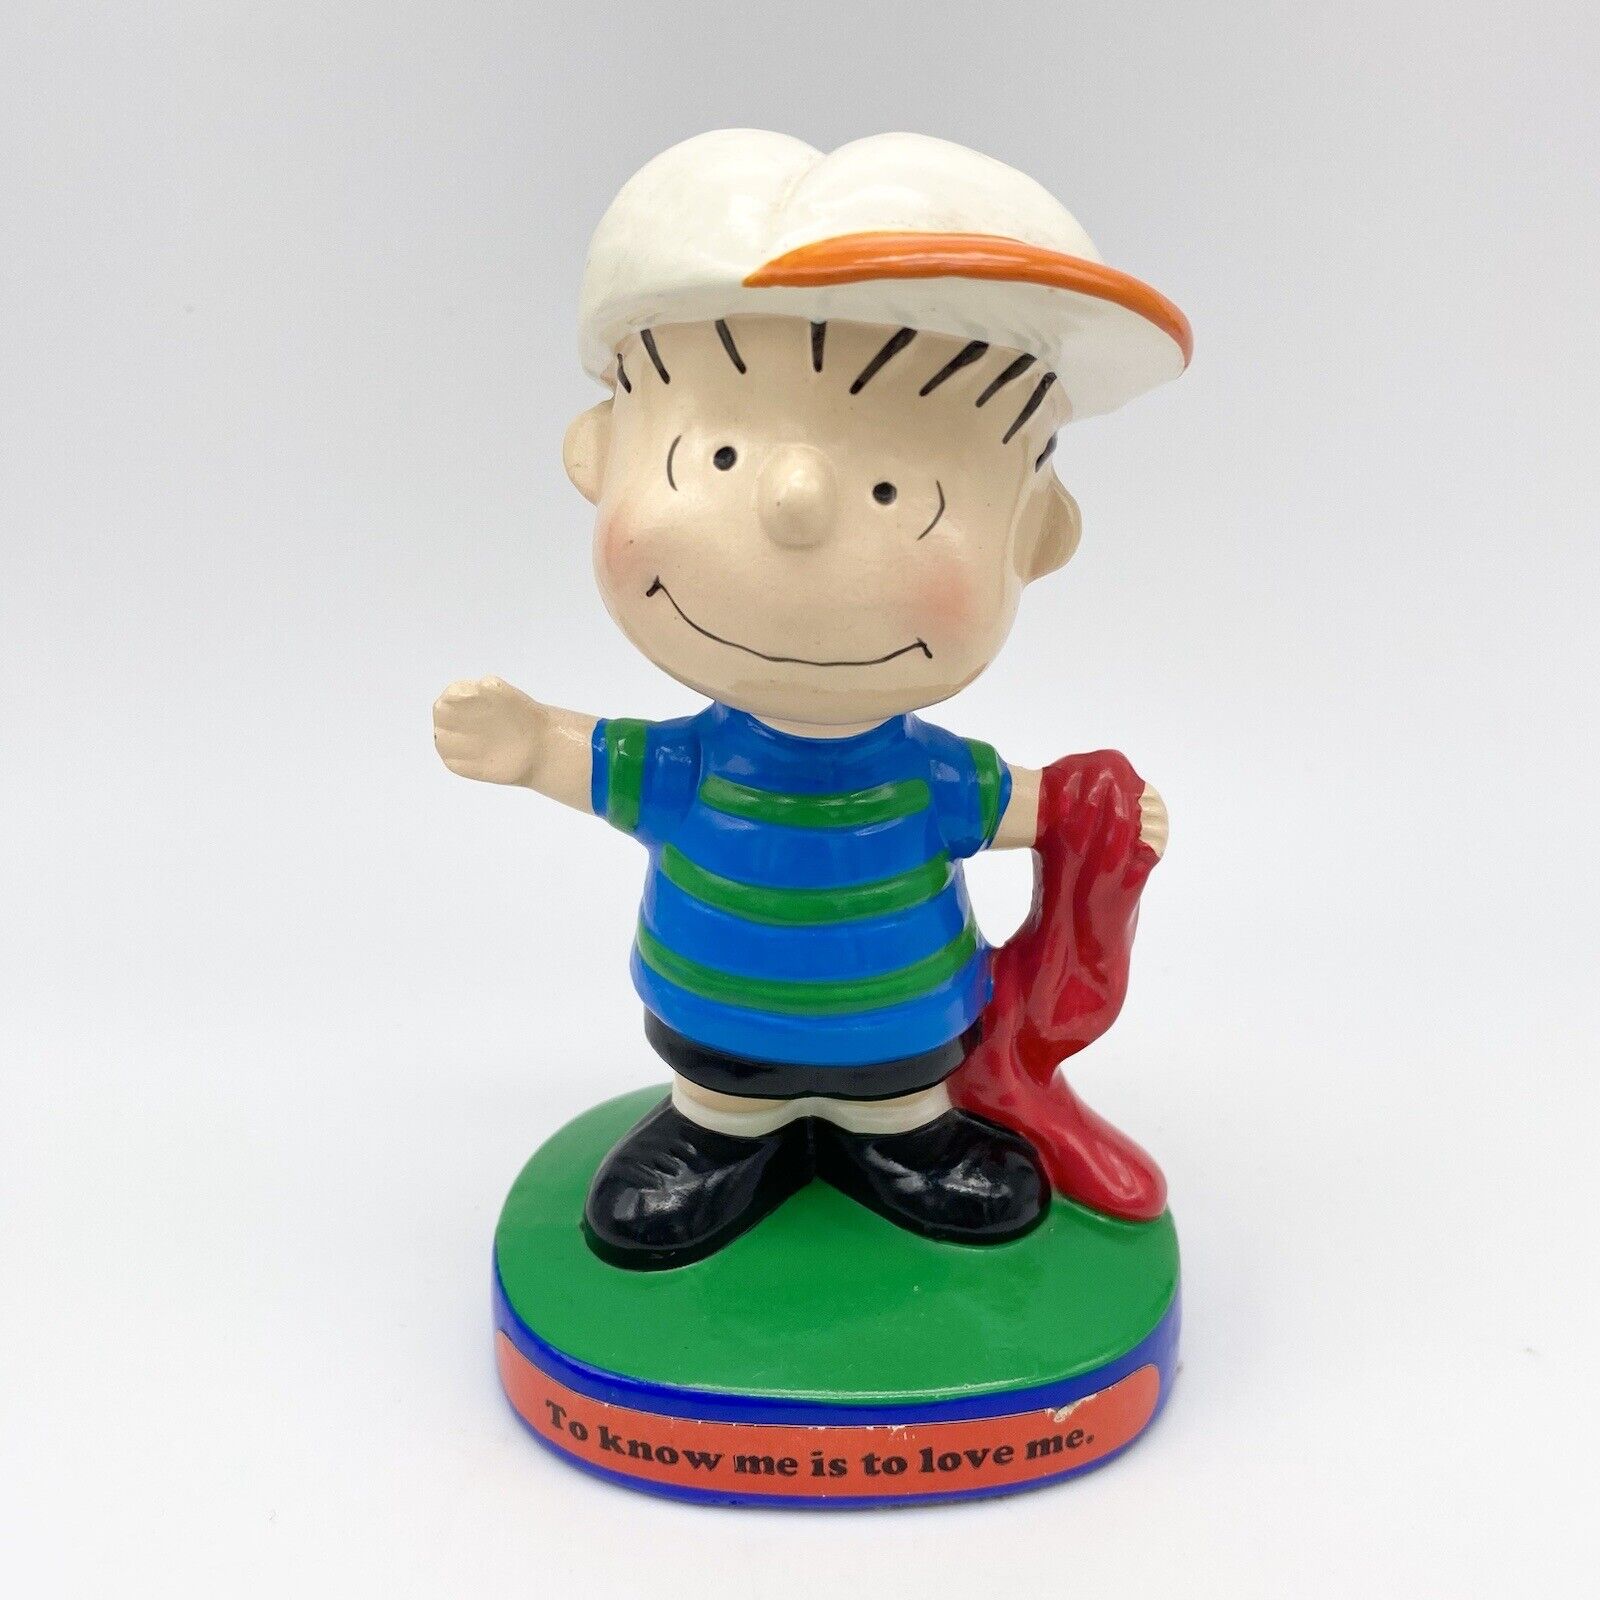 Vintage Peanuts Figurine Linus With Blanket To Know Me Is To Love Me Japan 1970s